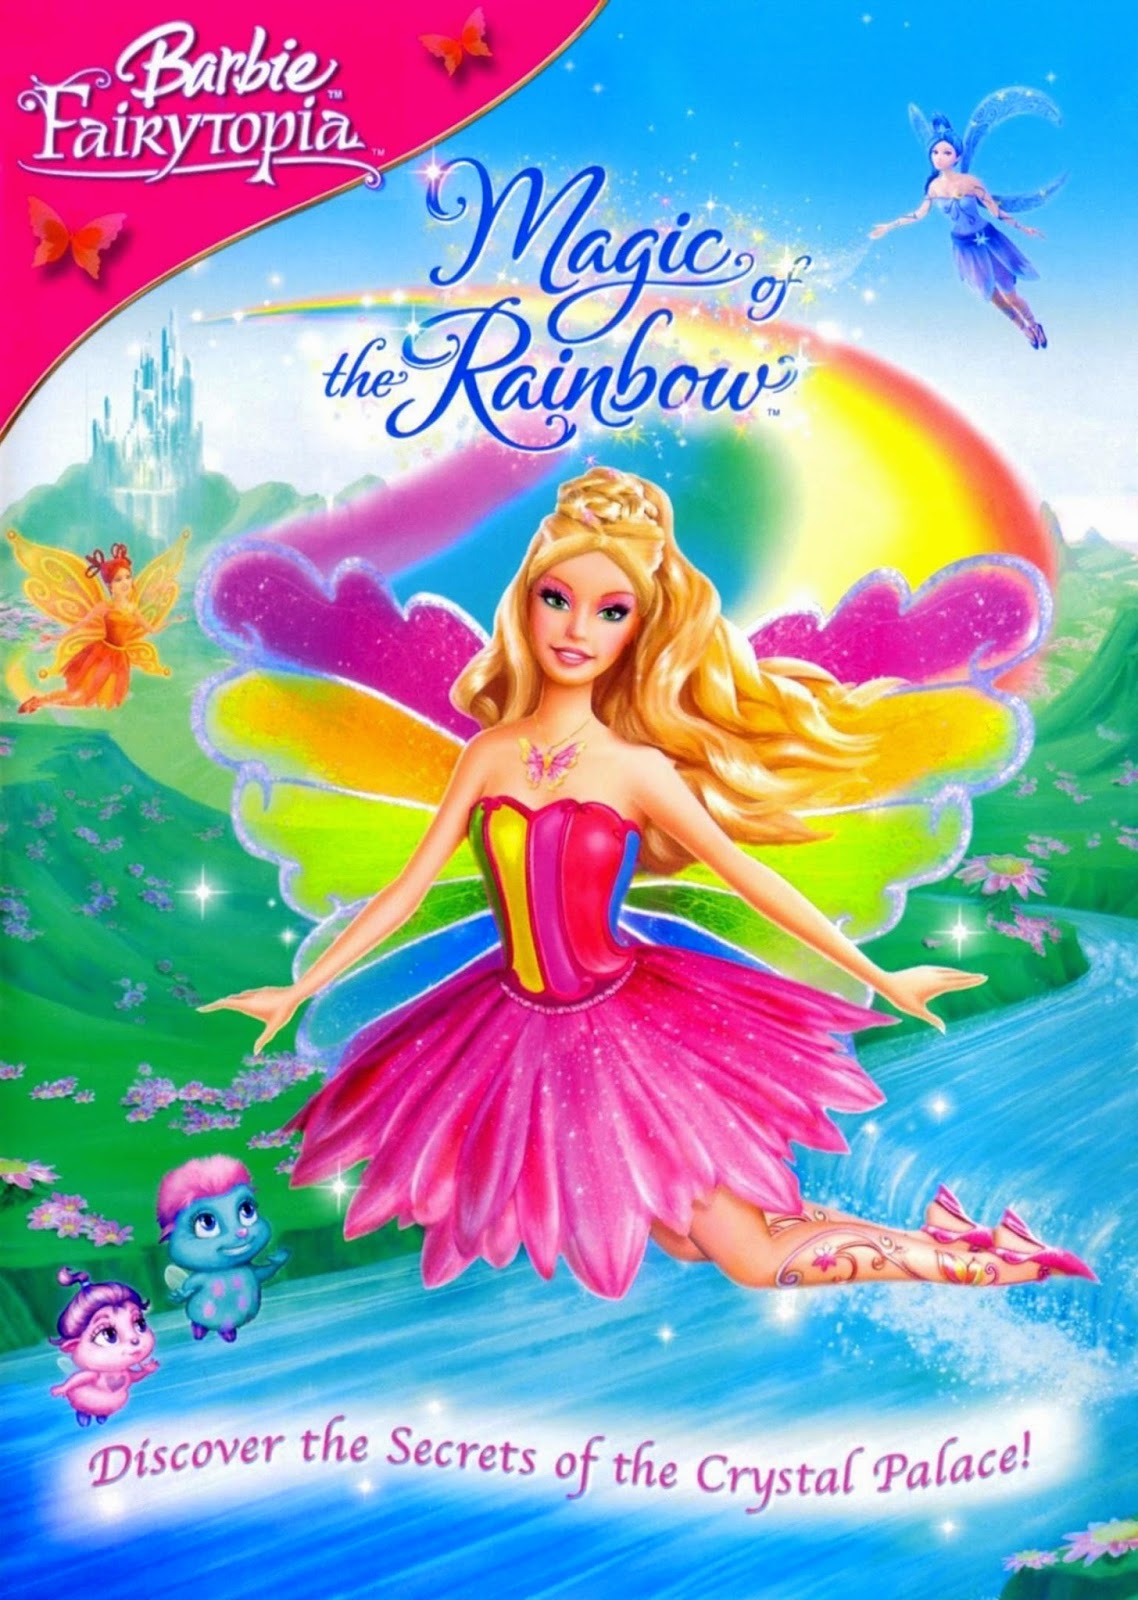 Barbie Fairytopia: Magic of the Rainbow (2007) Full Movie HD